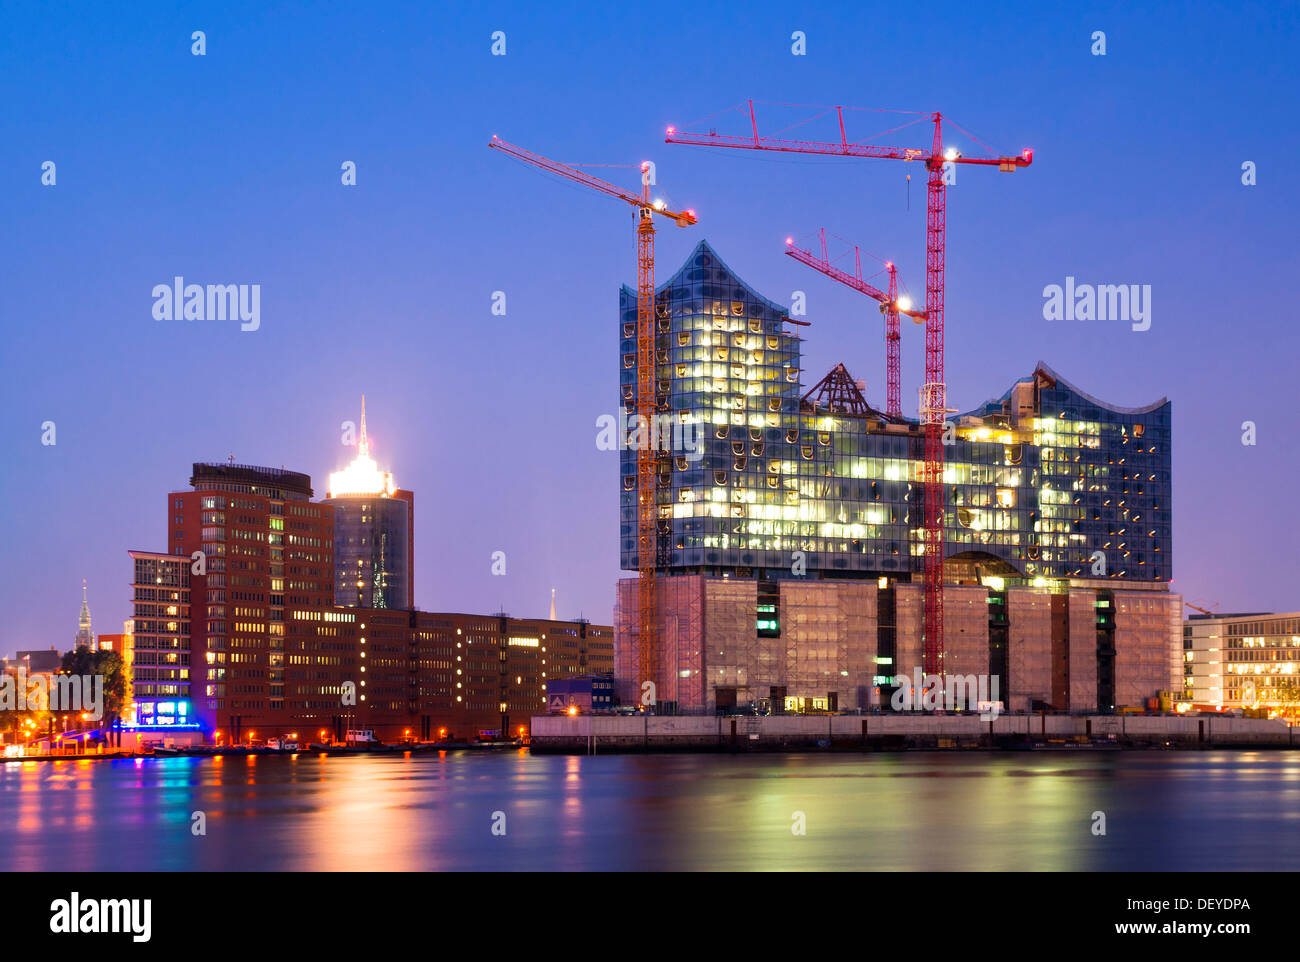 Elbe Philharmonic Hall, construction site at dusk, HafenCity, Hamburg Stock Photo